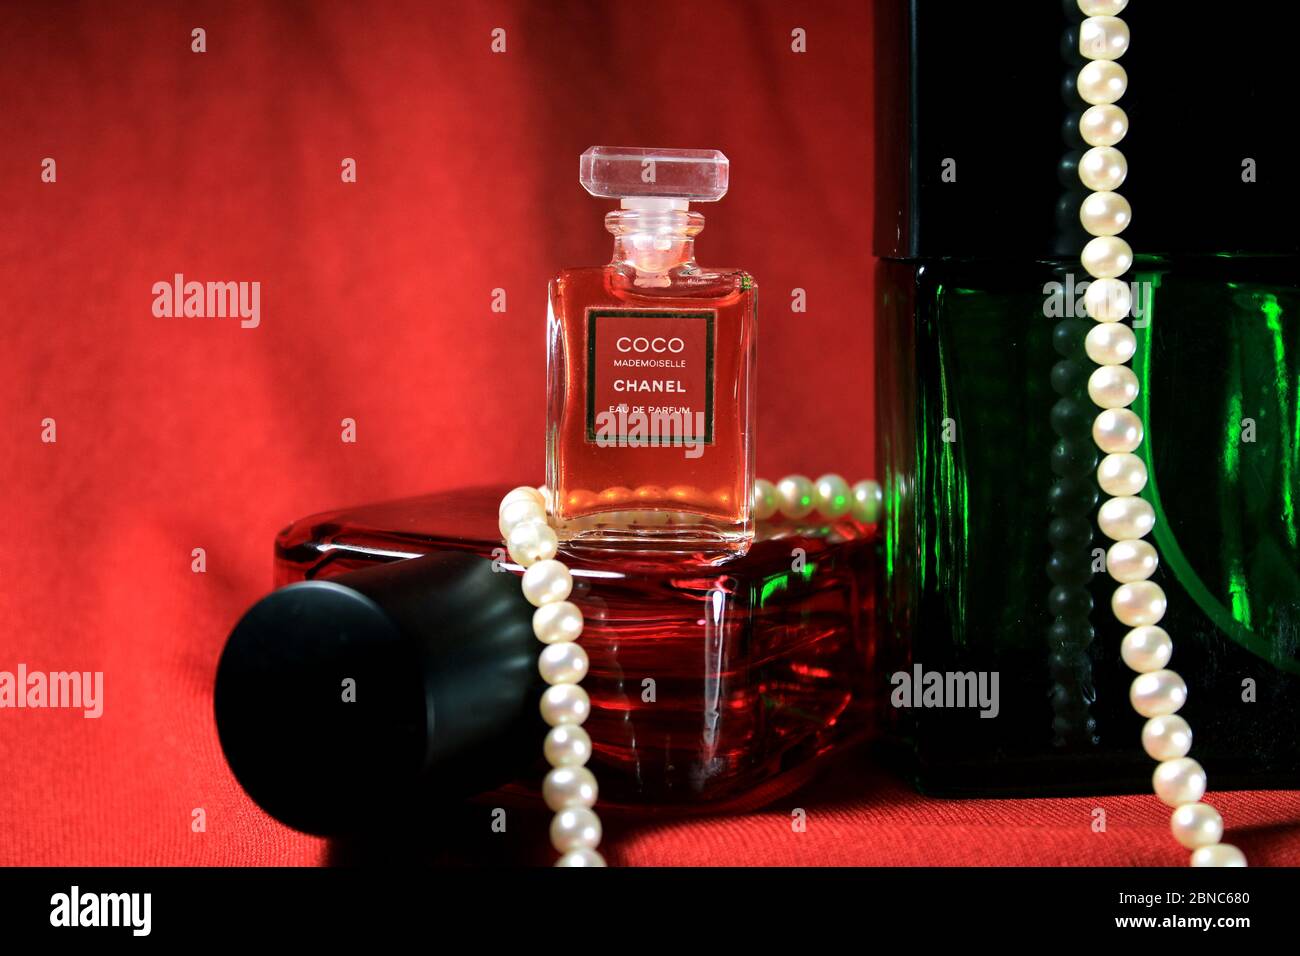 Chanel Perfume for Men & Women, Paris-Edimbourg Review